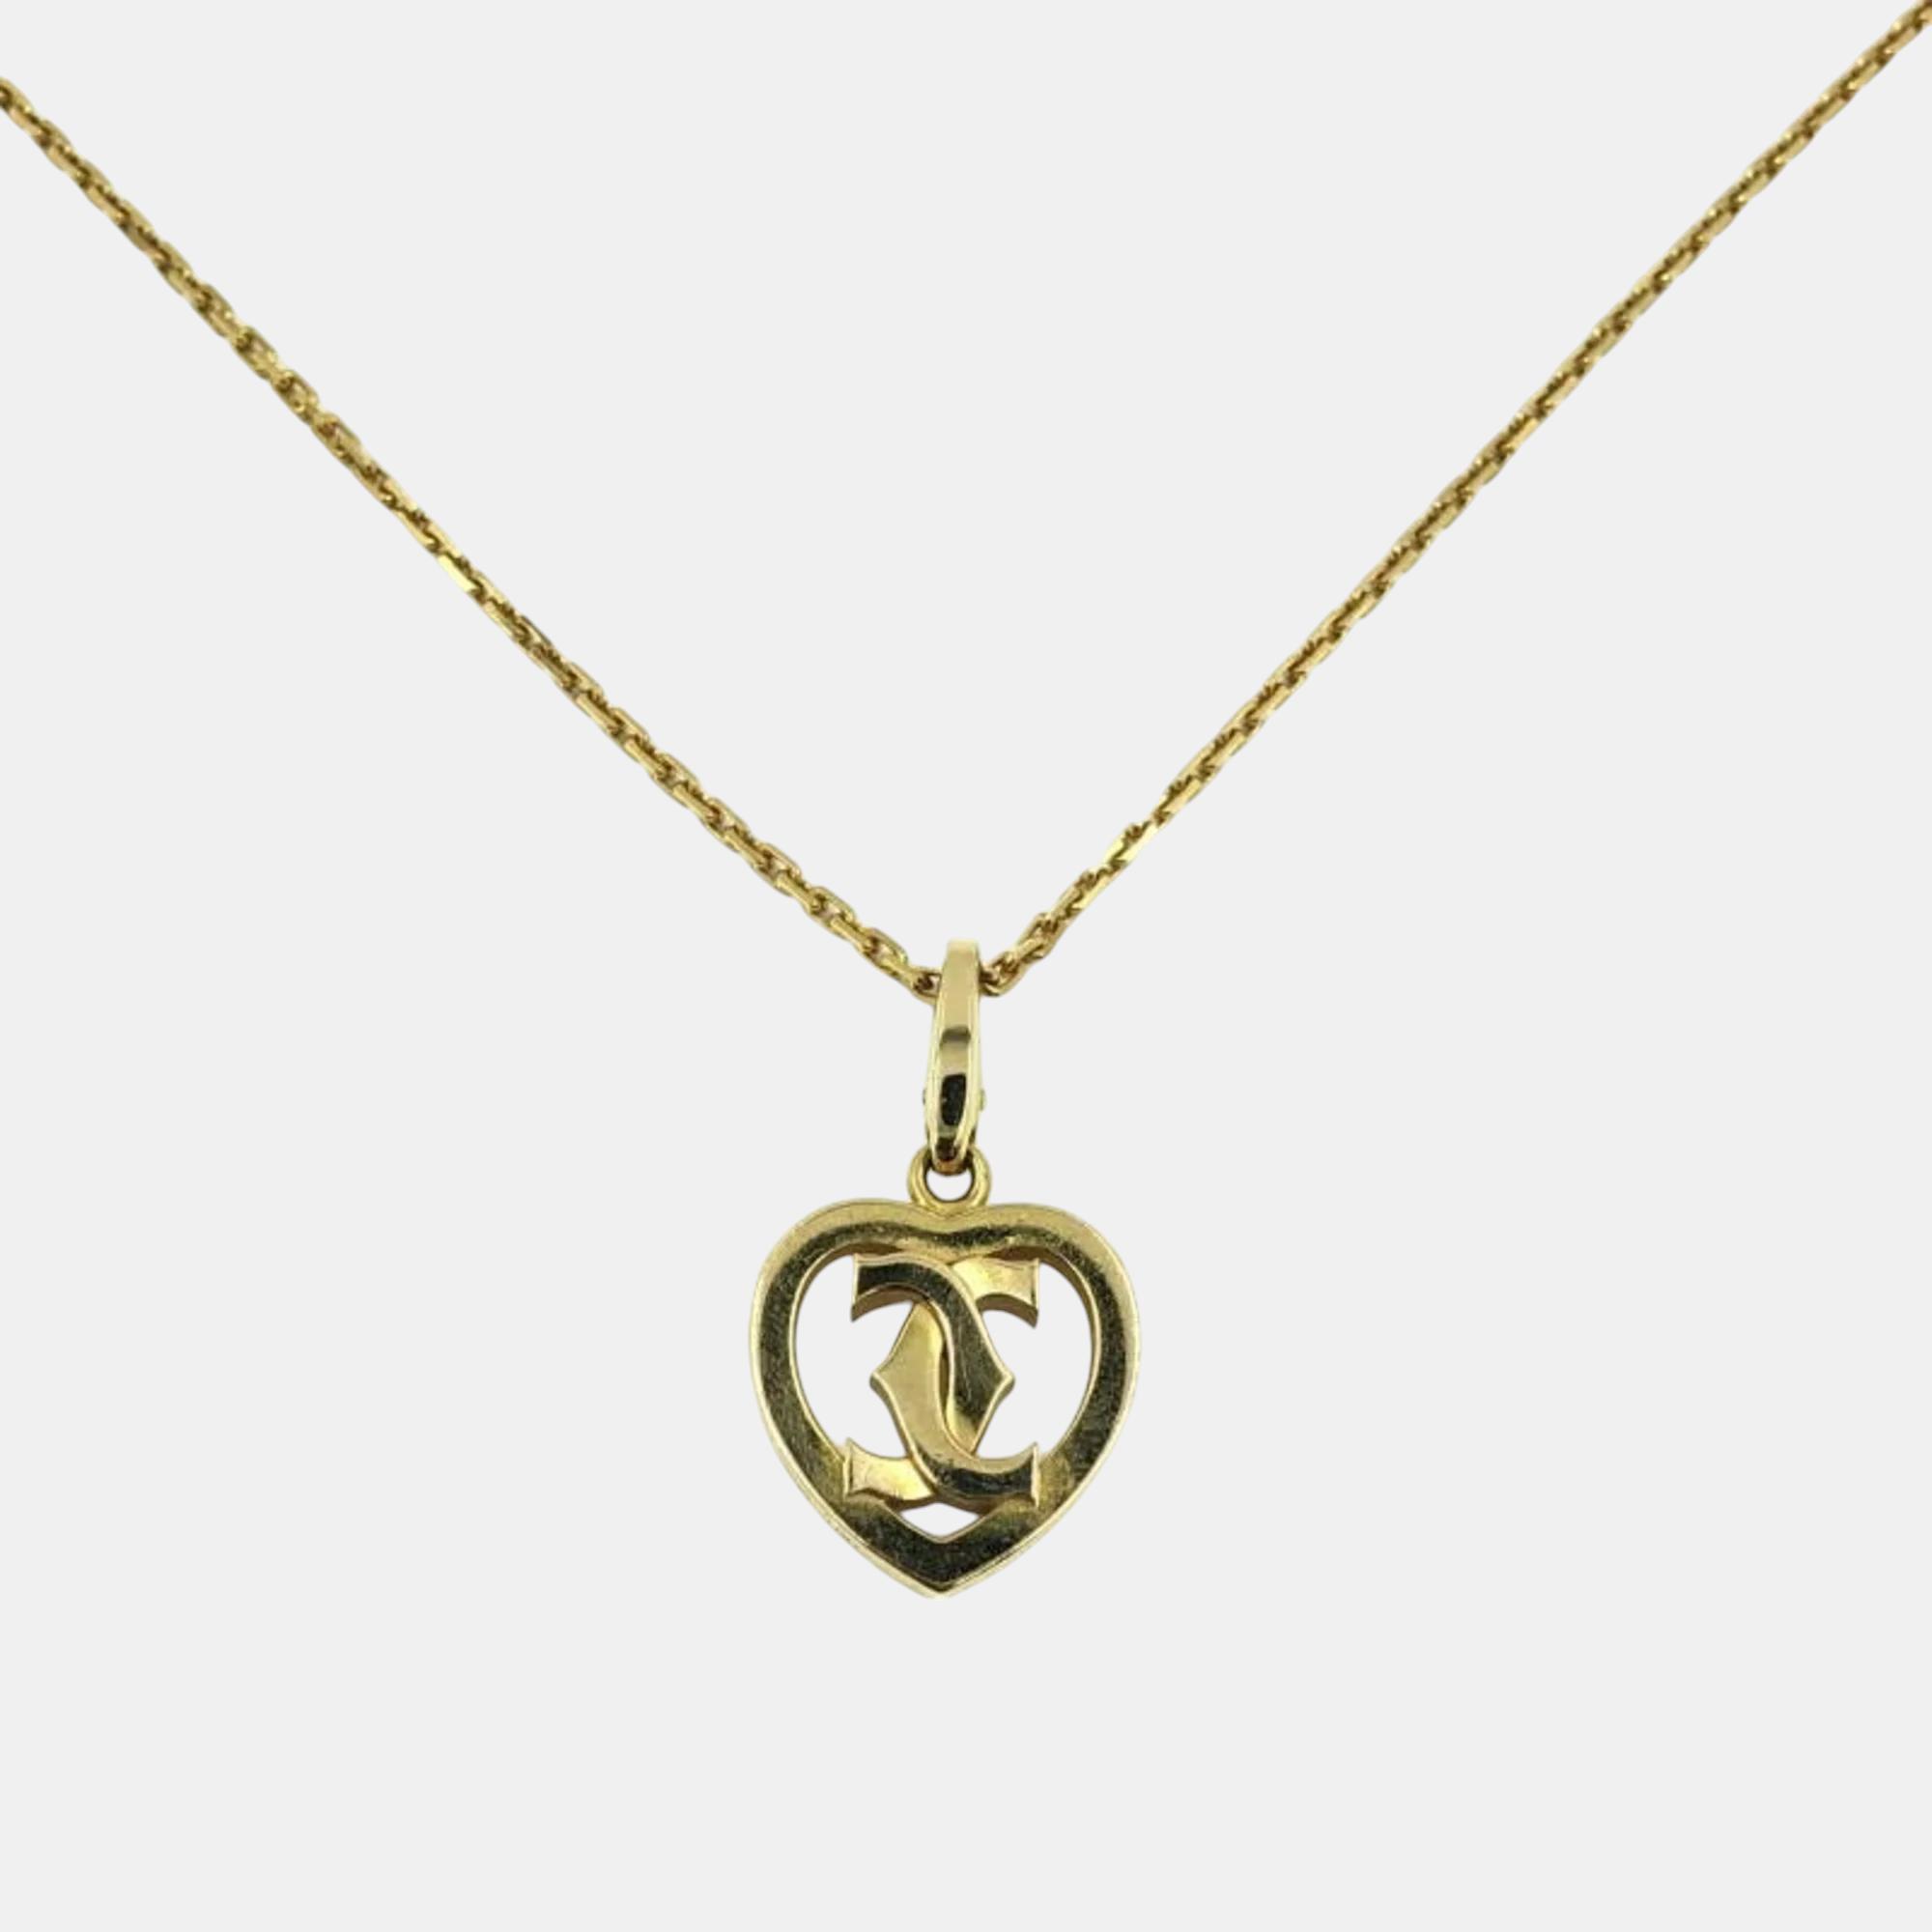 Cartier 18k yellow gold heart c pendant necklace